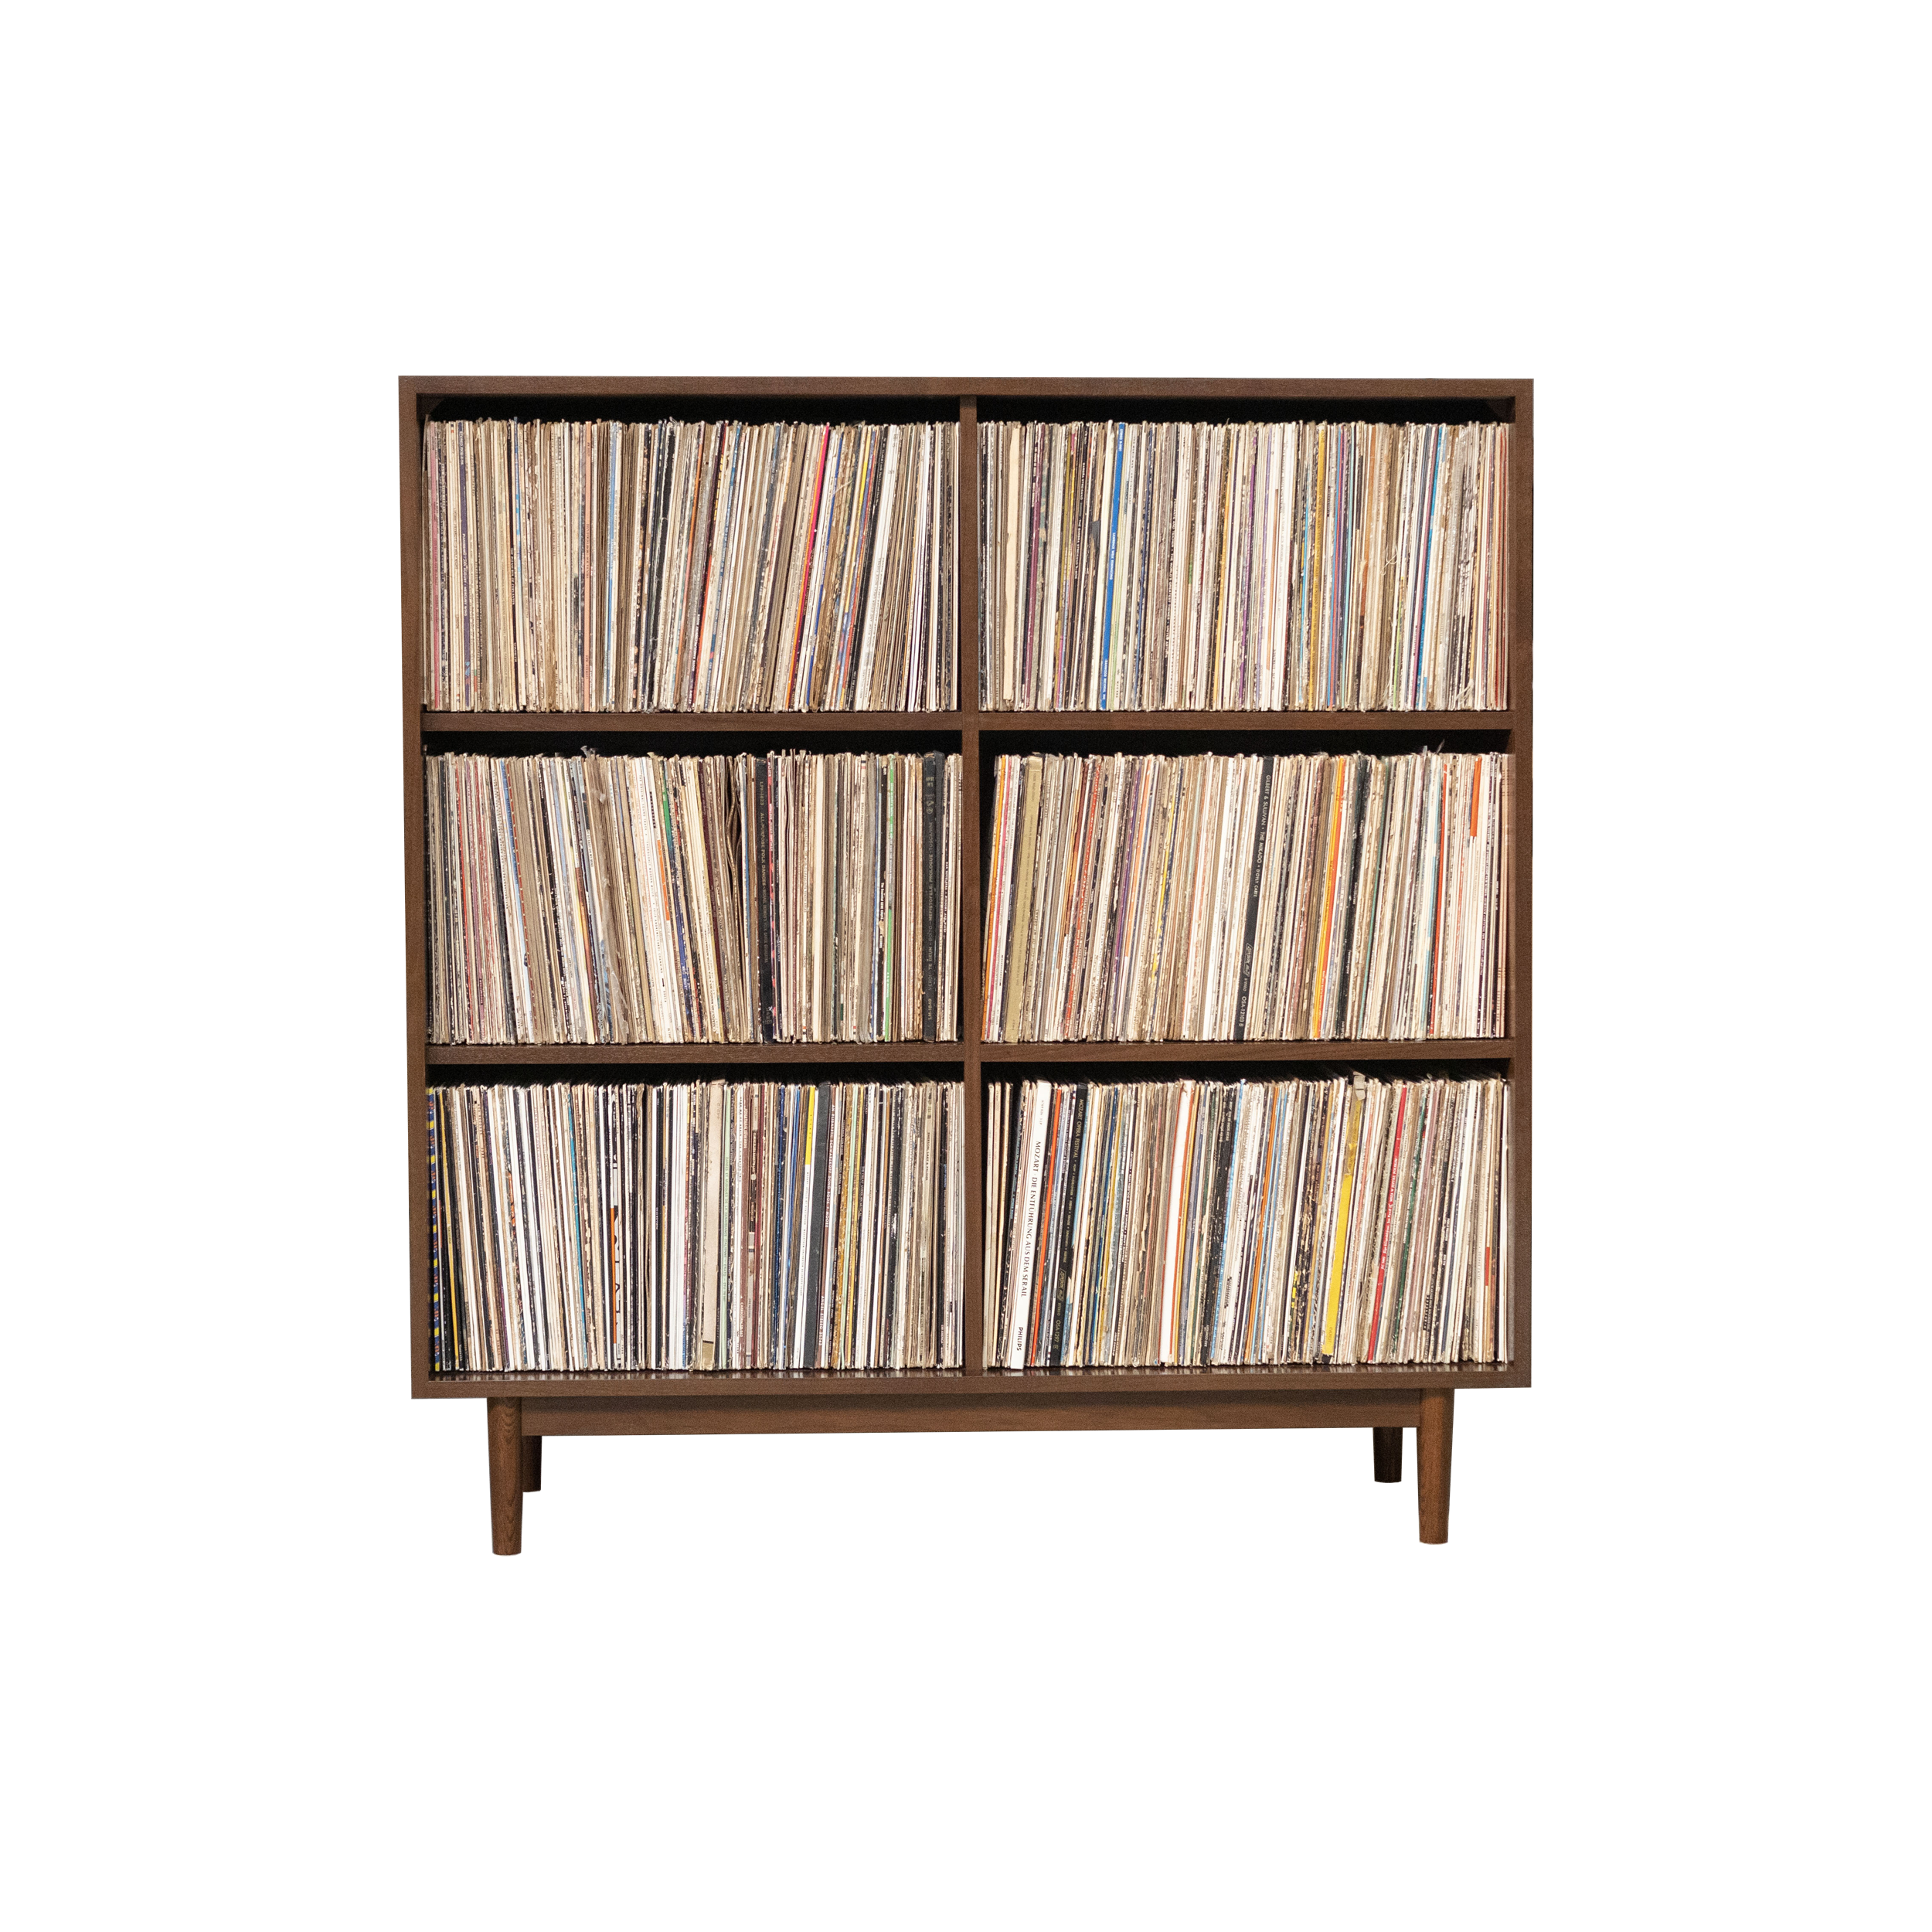 3 x 2 Record Storage Cabinet